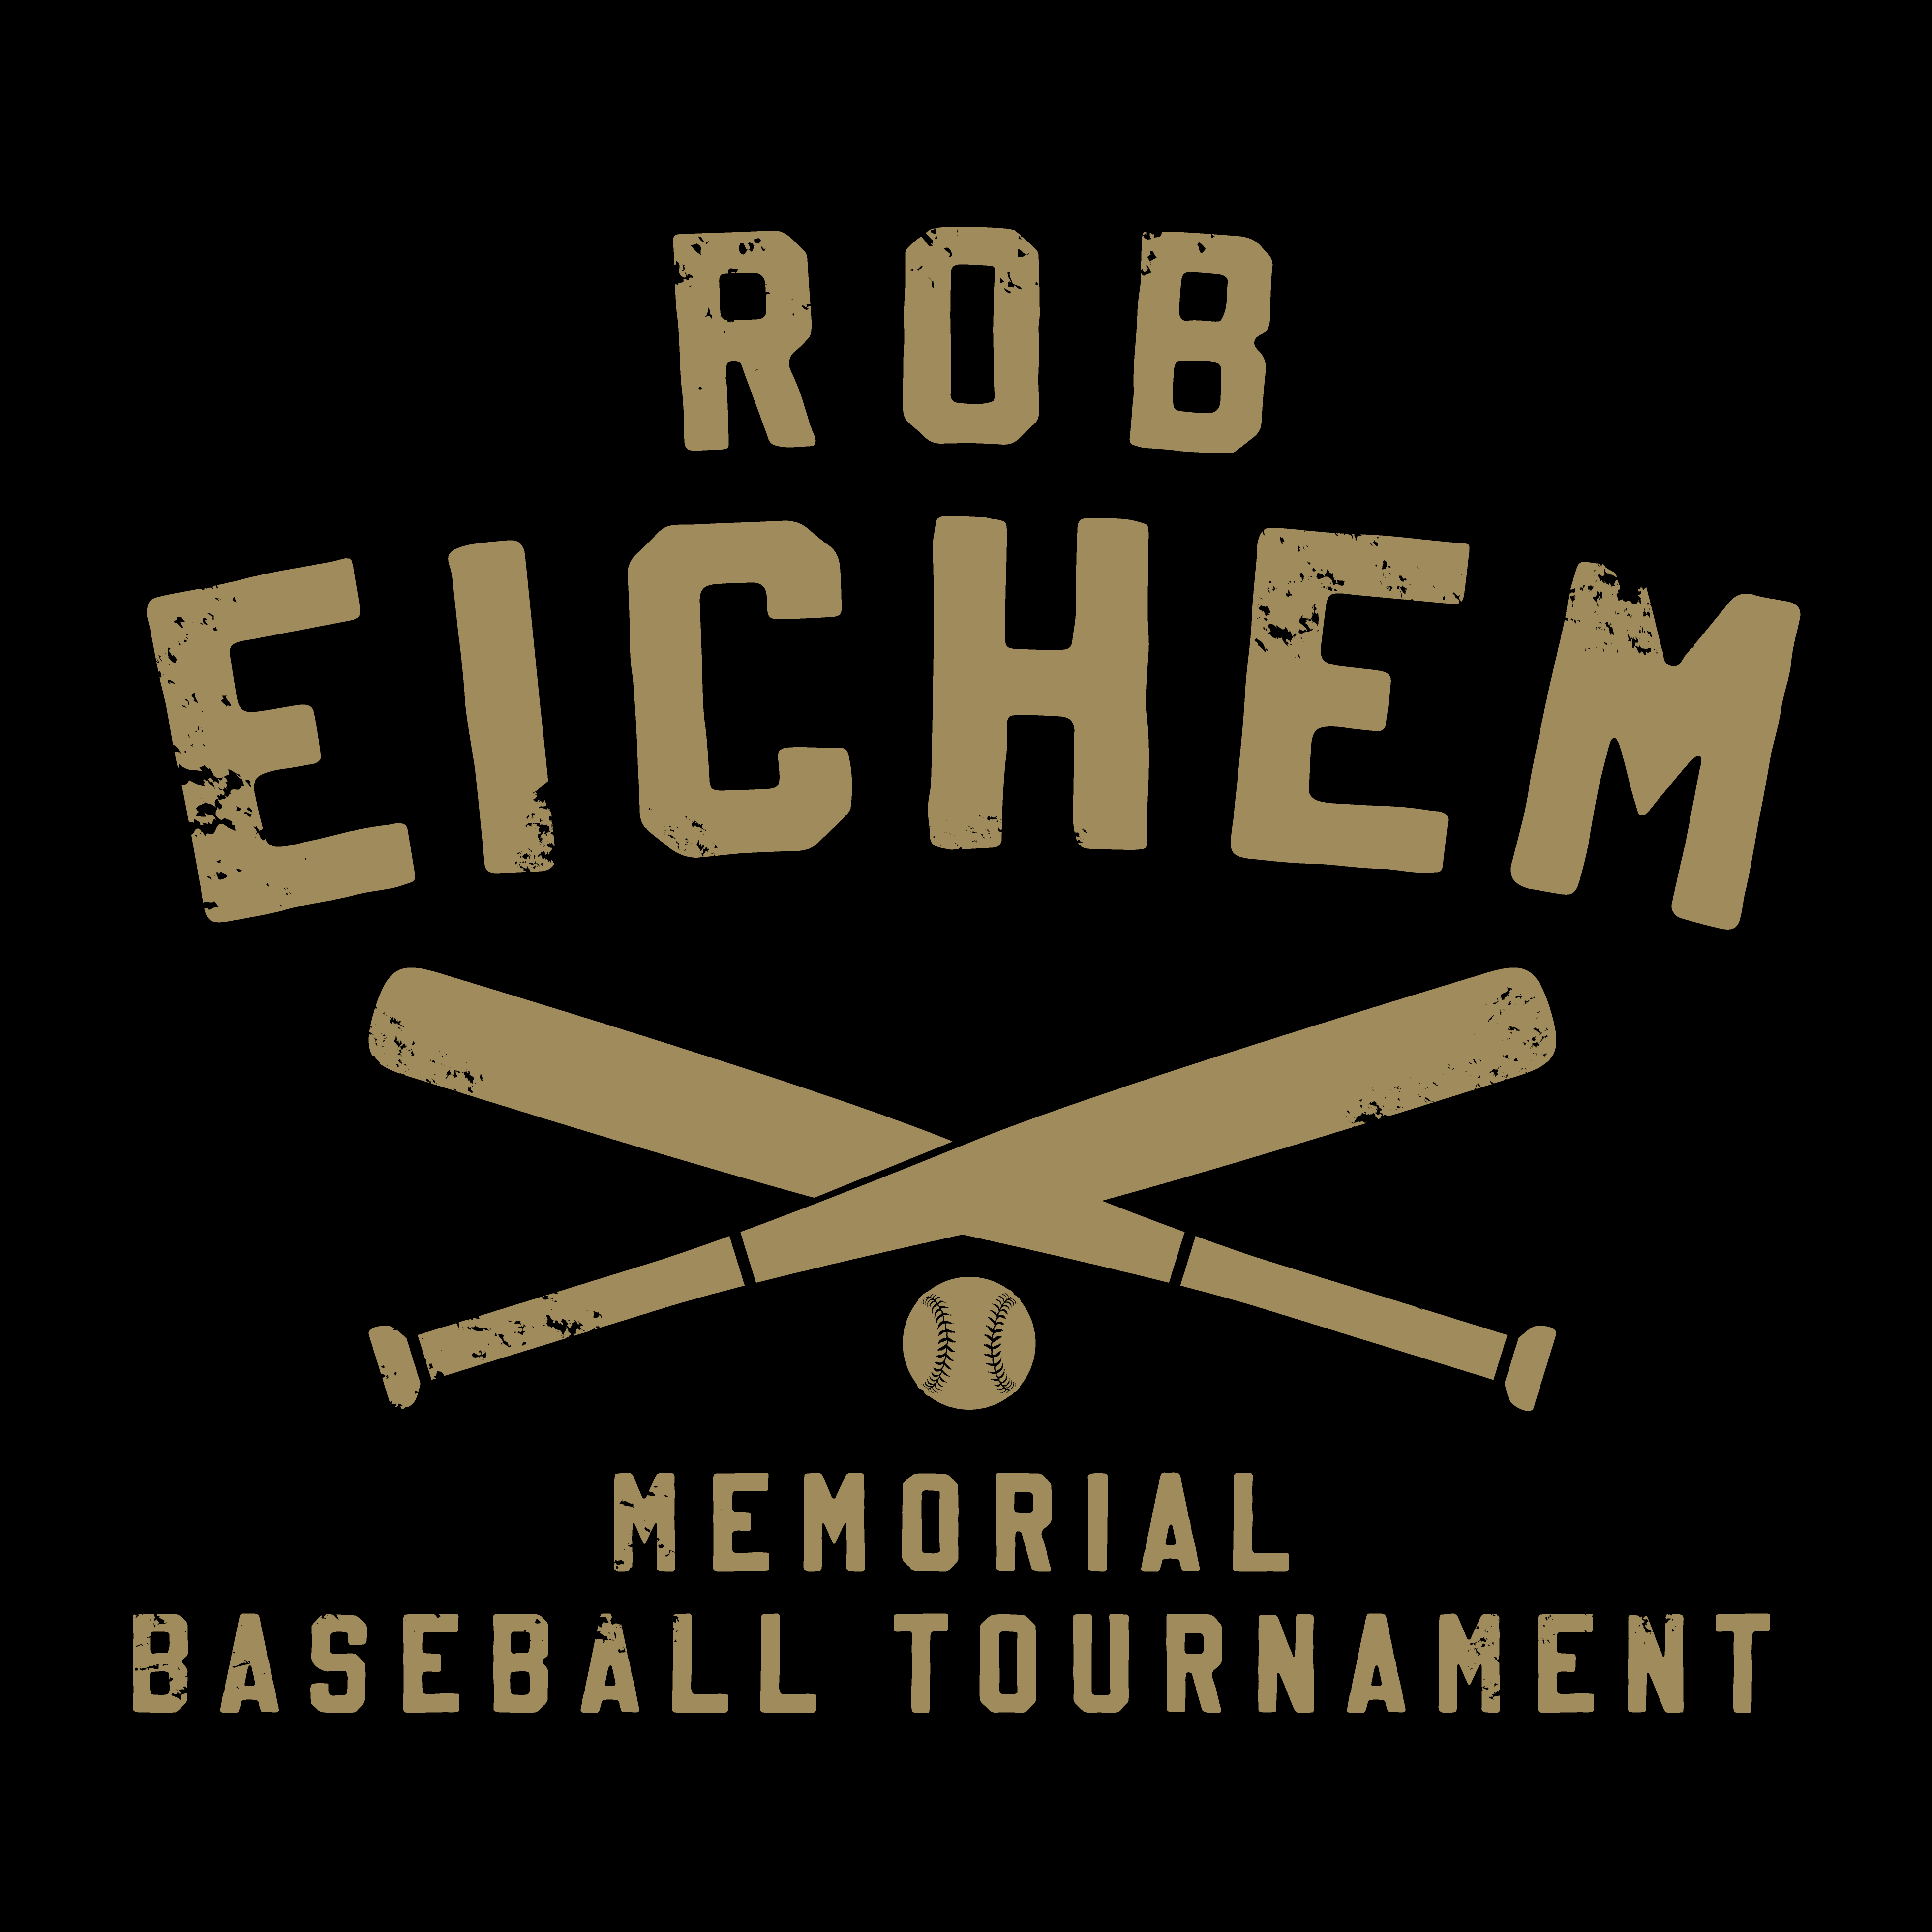 Rob Eichem Memorial Baseball Tournament logo